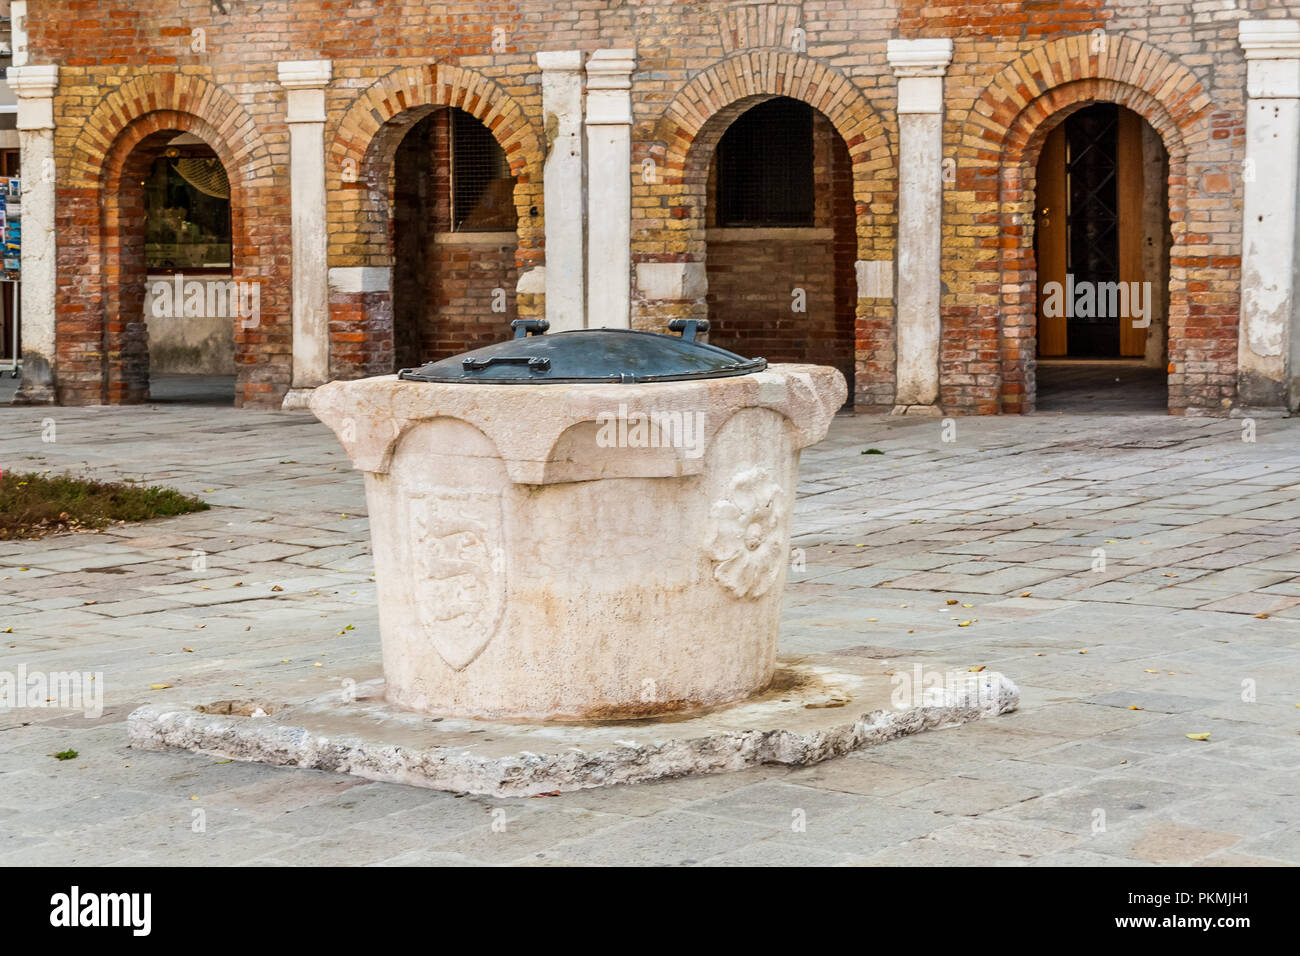 Alten Brunnen in Sotoportego de Ghetto, das Jüdische Ghetto in Venedig, Italien. Stockfoto